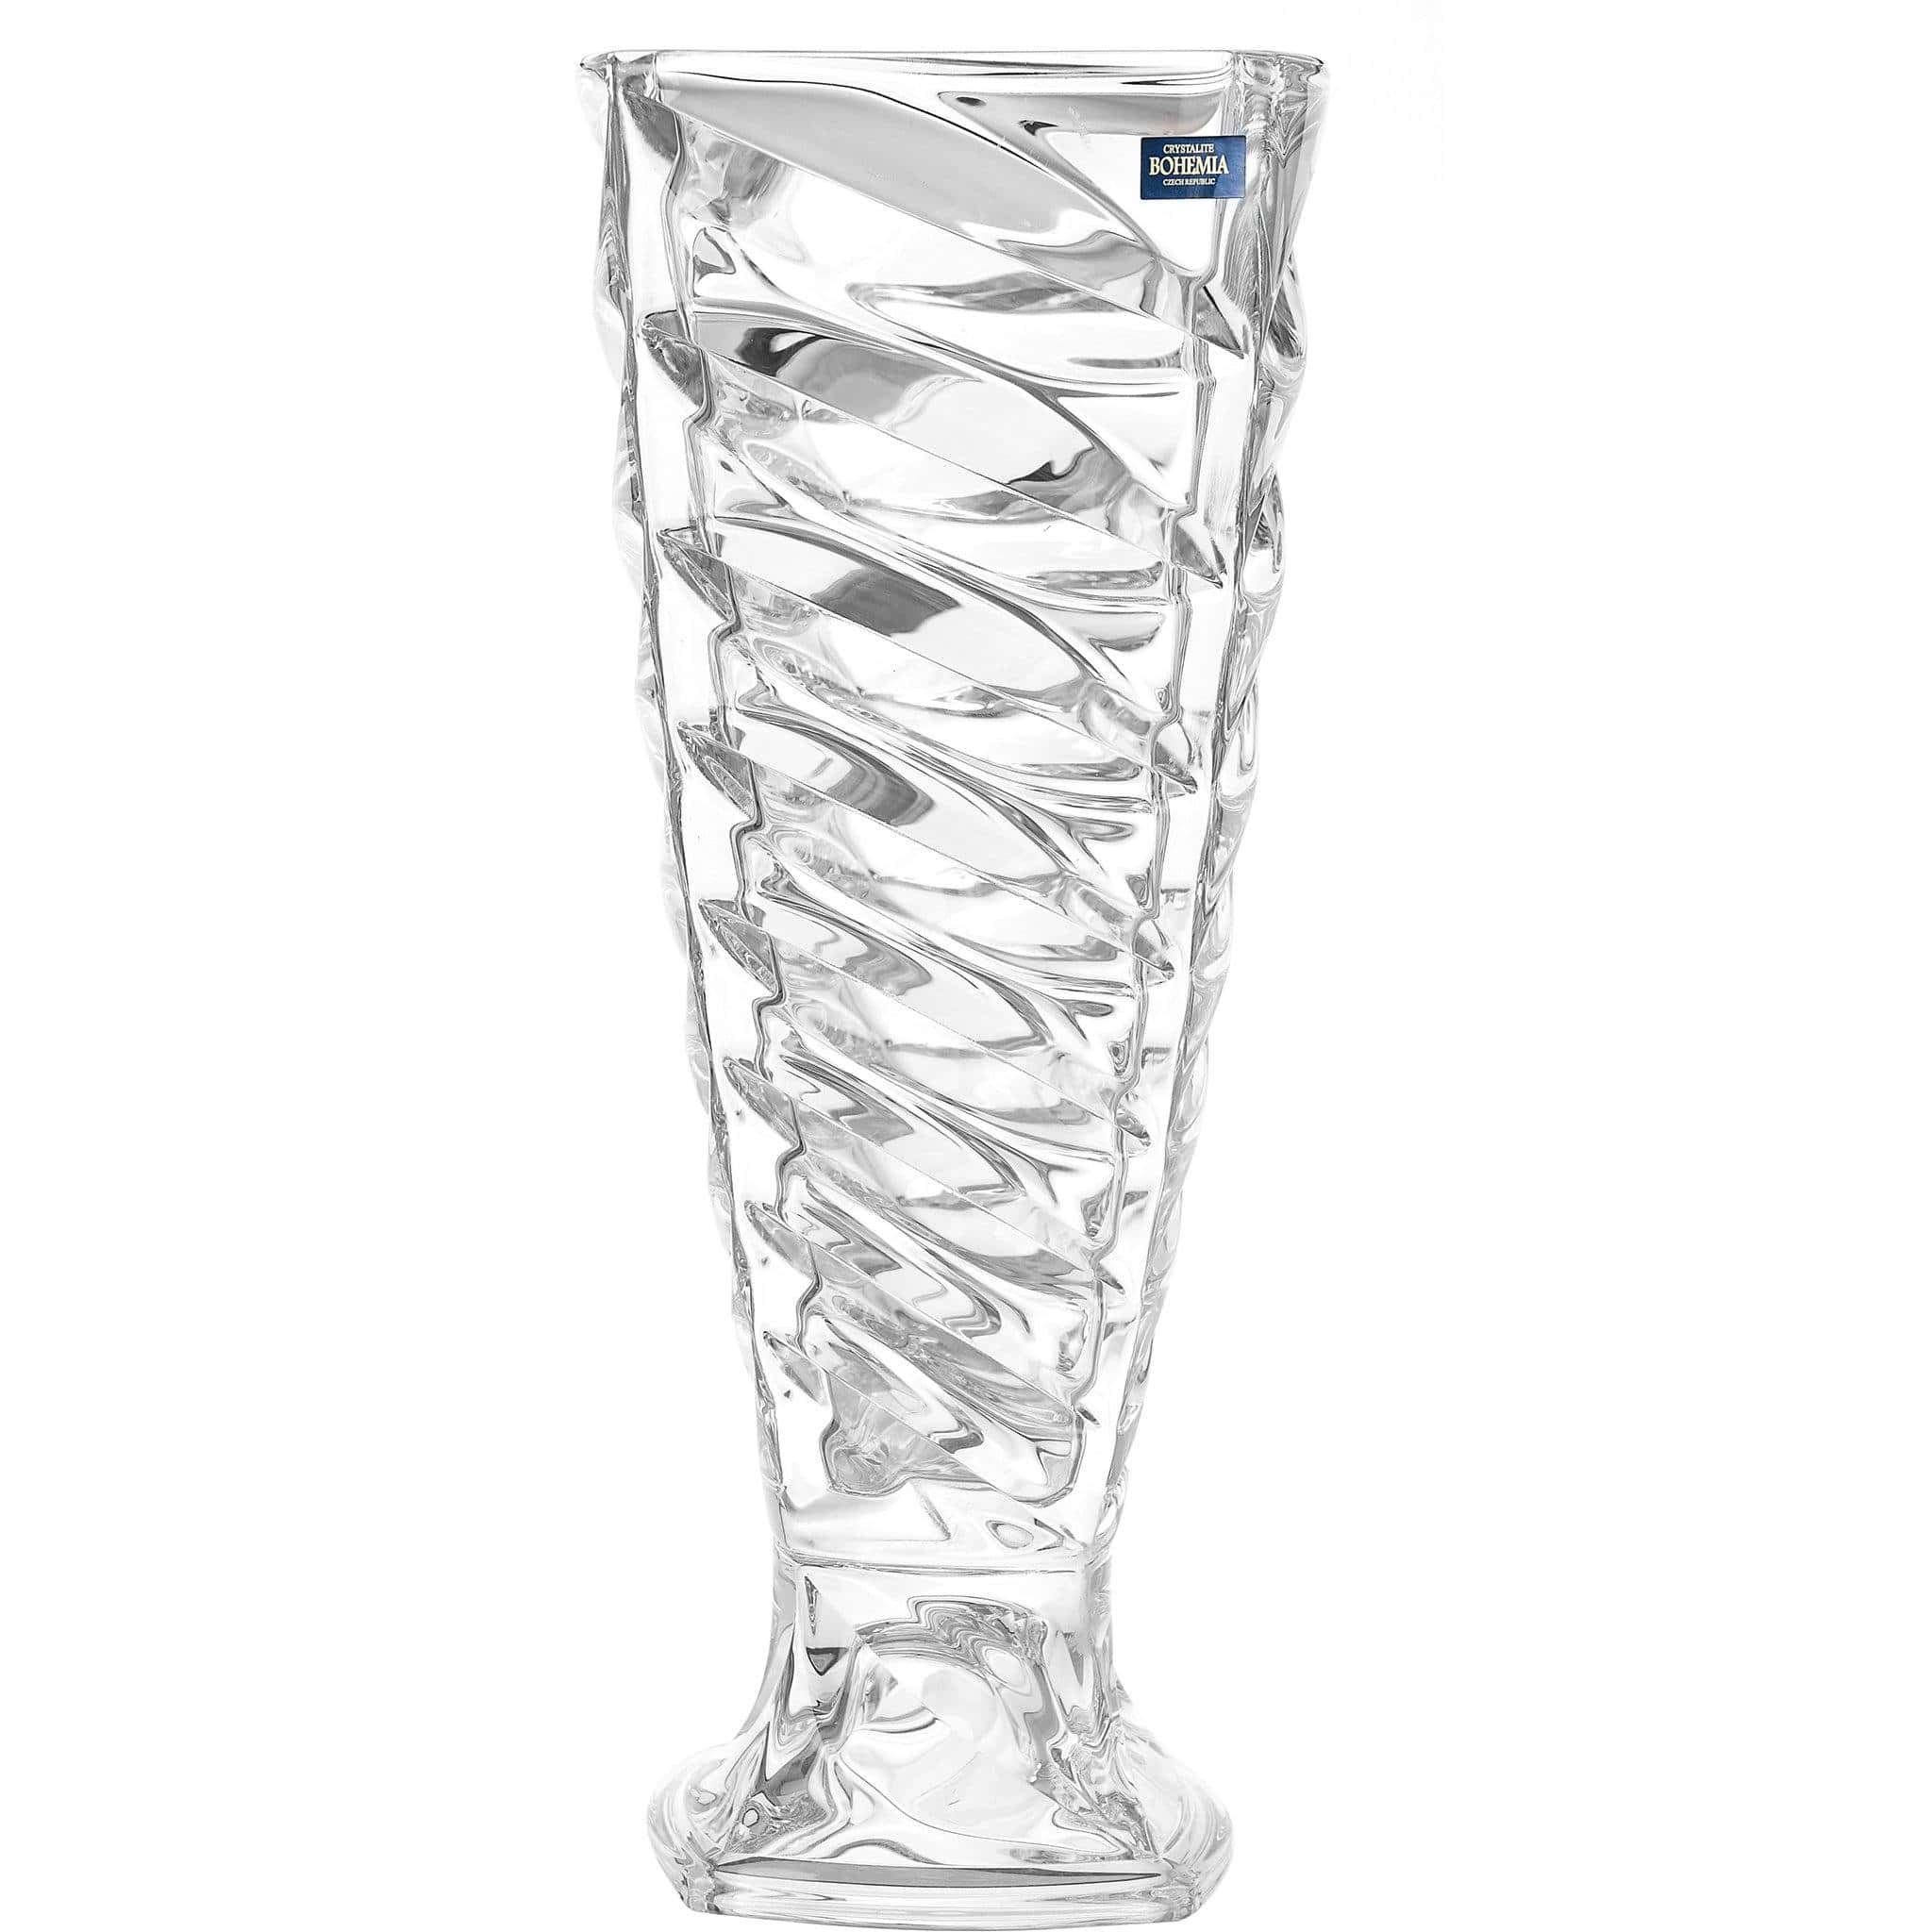 Bohemia Crystal - Wavy Crystal Vase with Base - 37.5cm - 2700010132